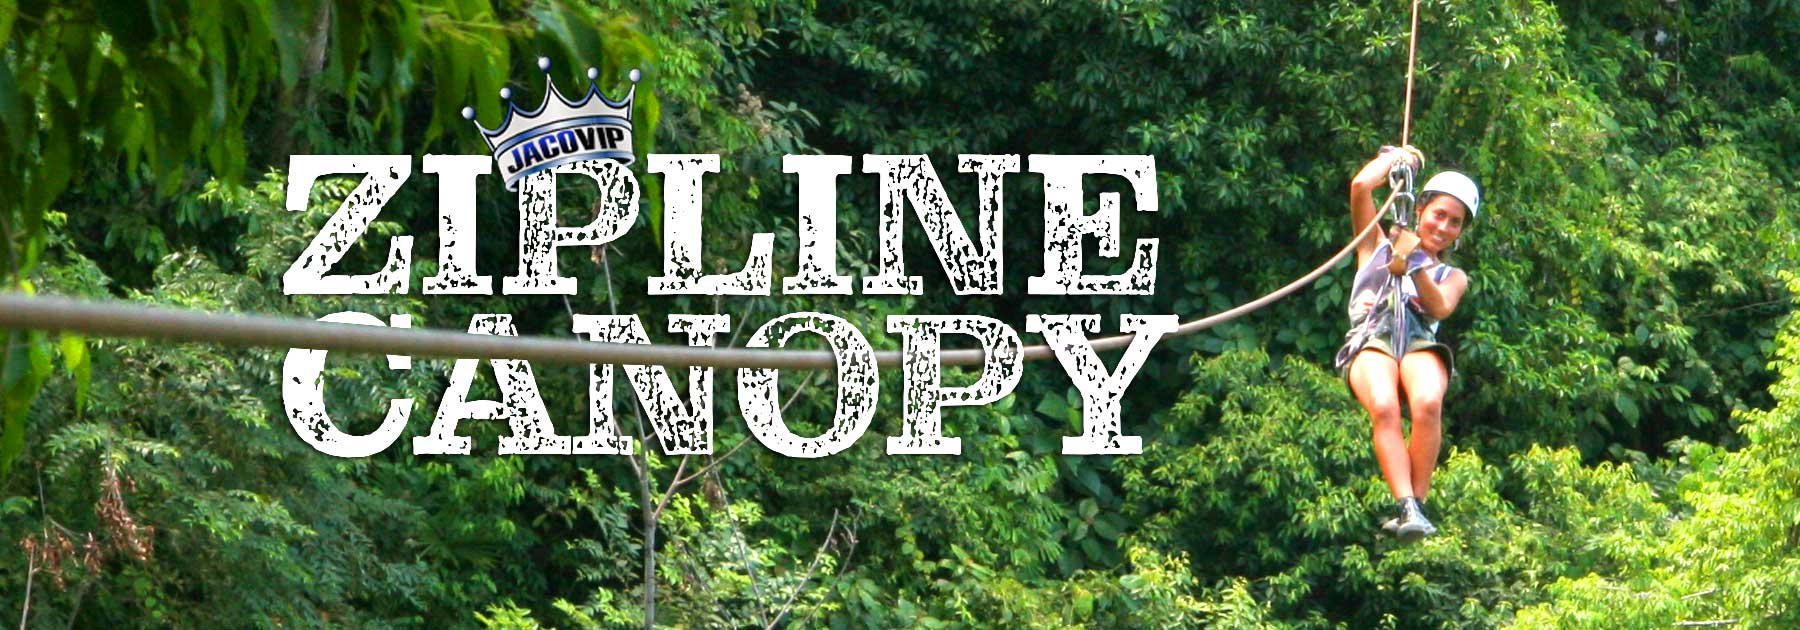 Zip line canopy tour near los Sueños and Jaco Beach Costa Rica